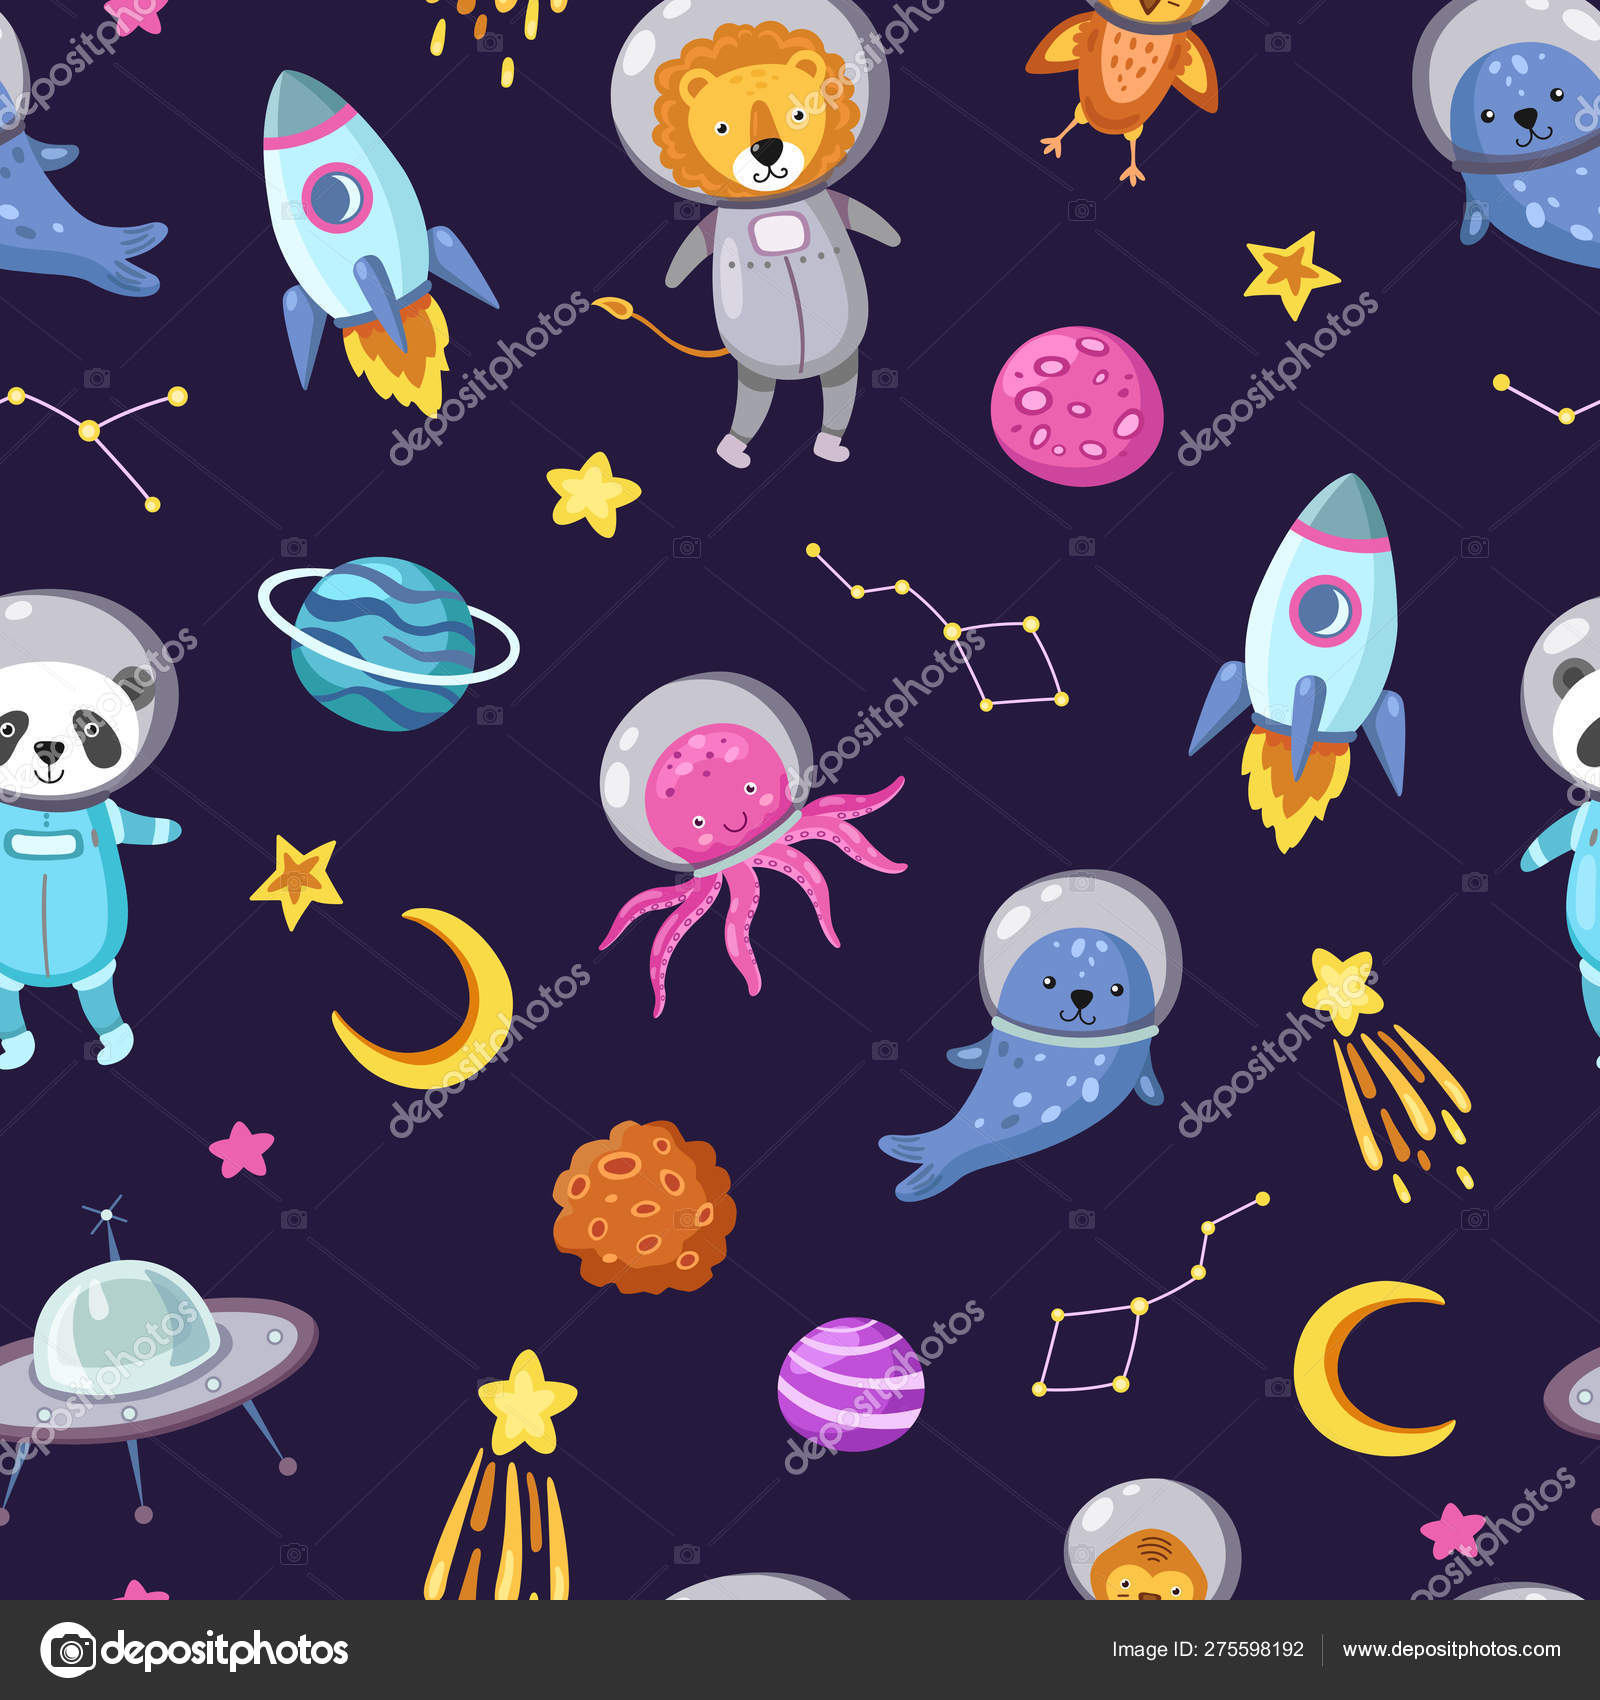 Space Animals - HD Wallpaper 